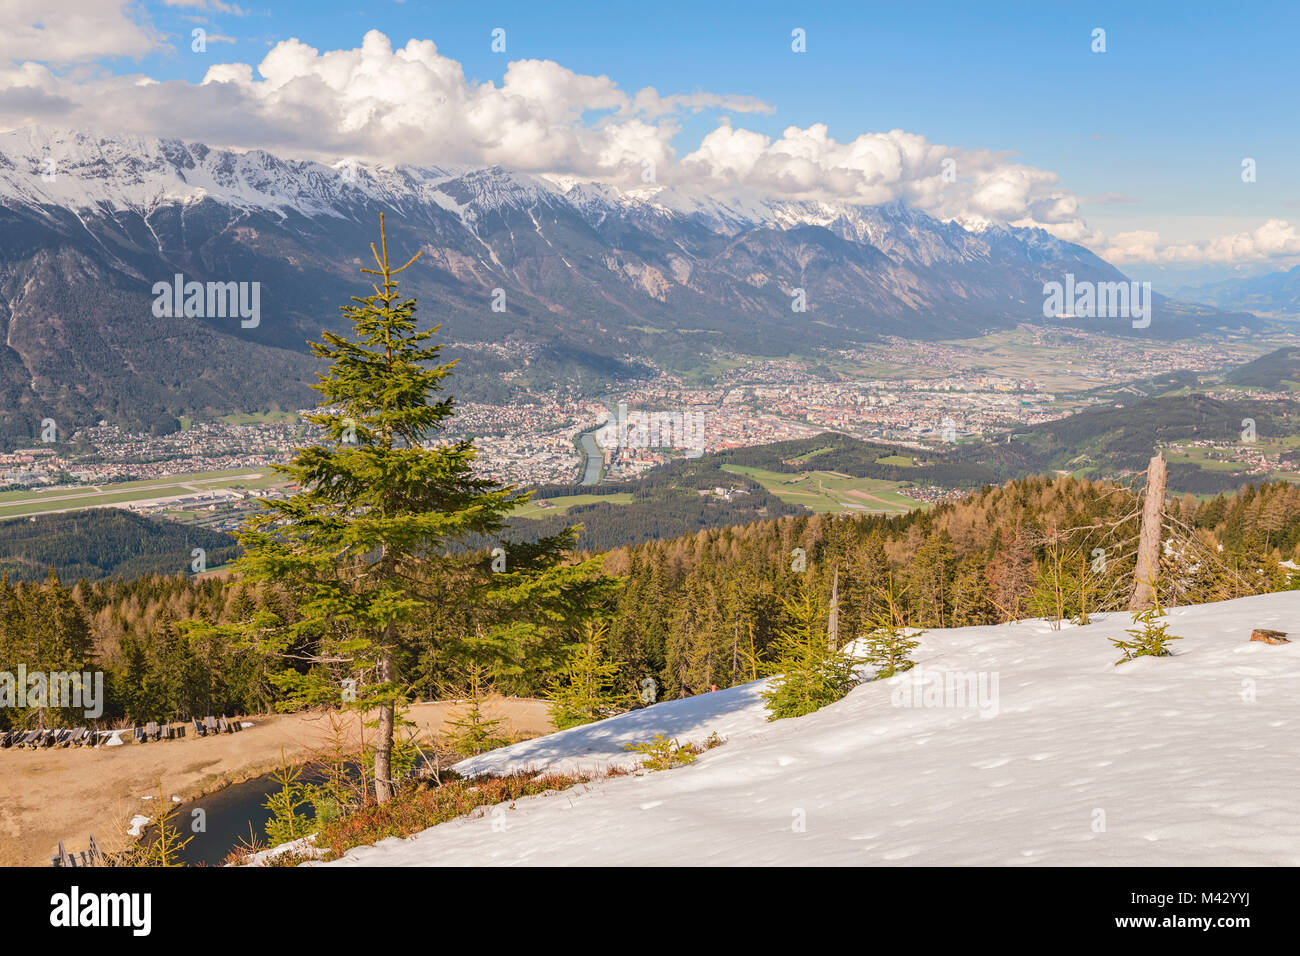 Panoramasee, Mutterer Alm, Mutters, Tirol - Tyrol, Austria, Europe Stock Photo